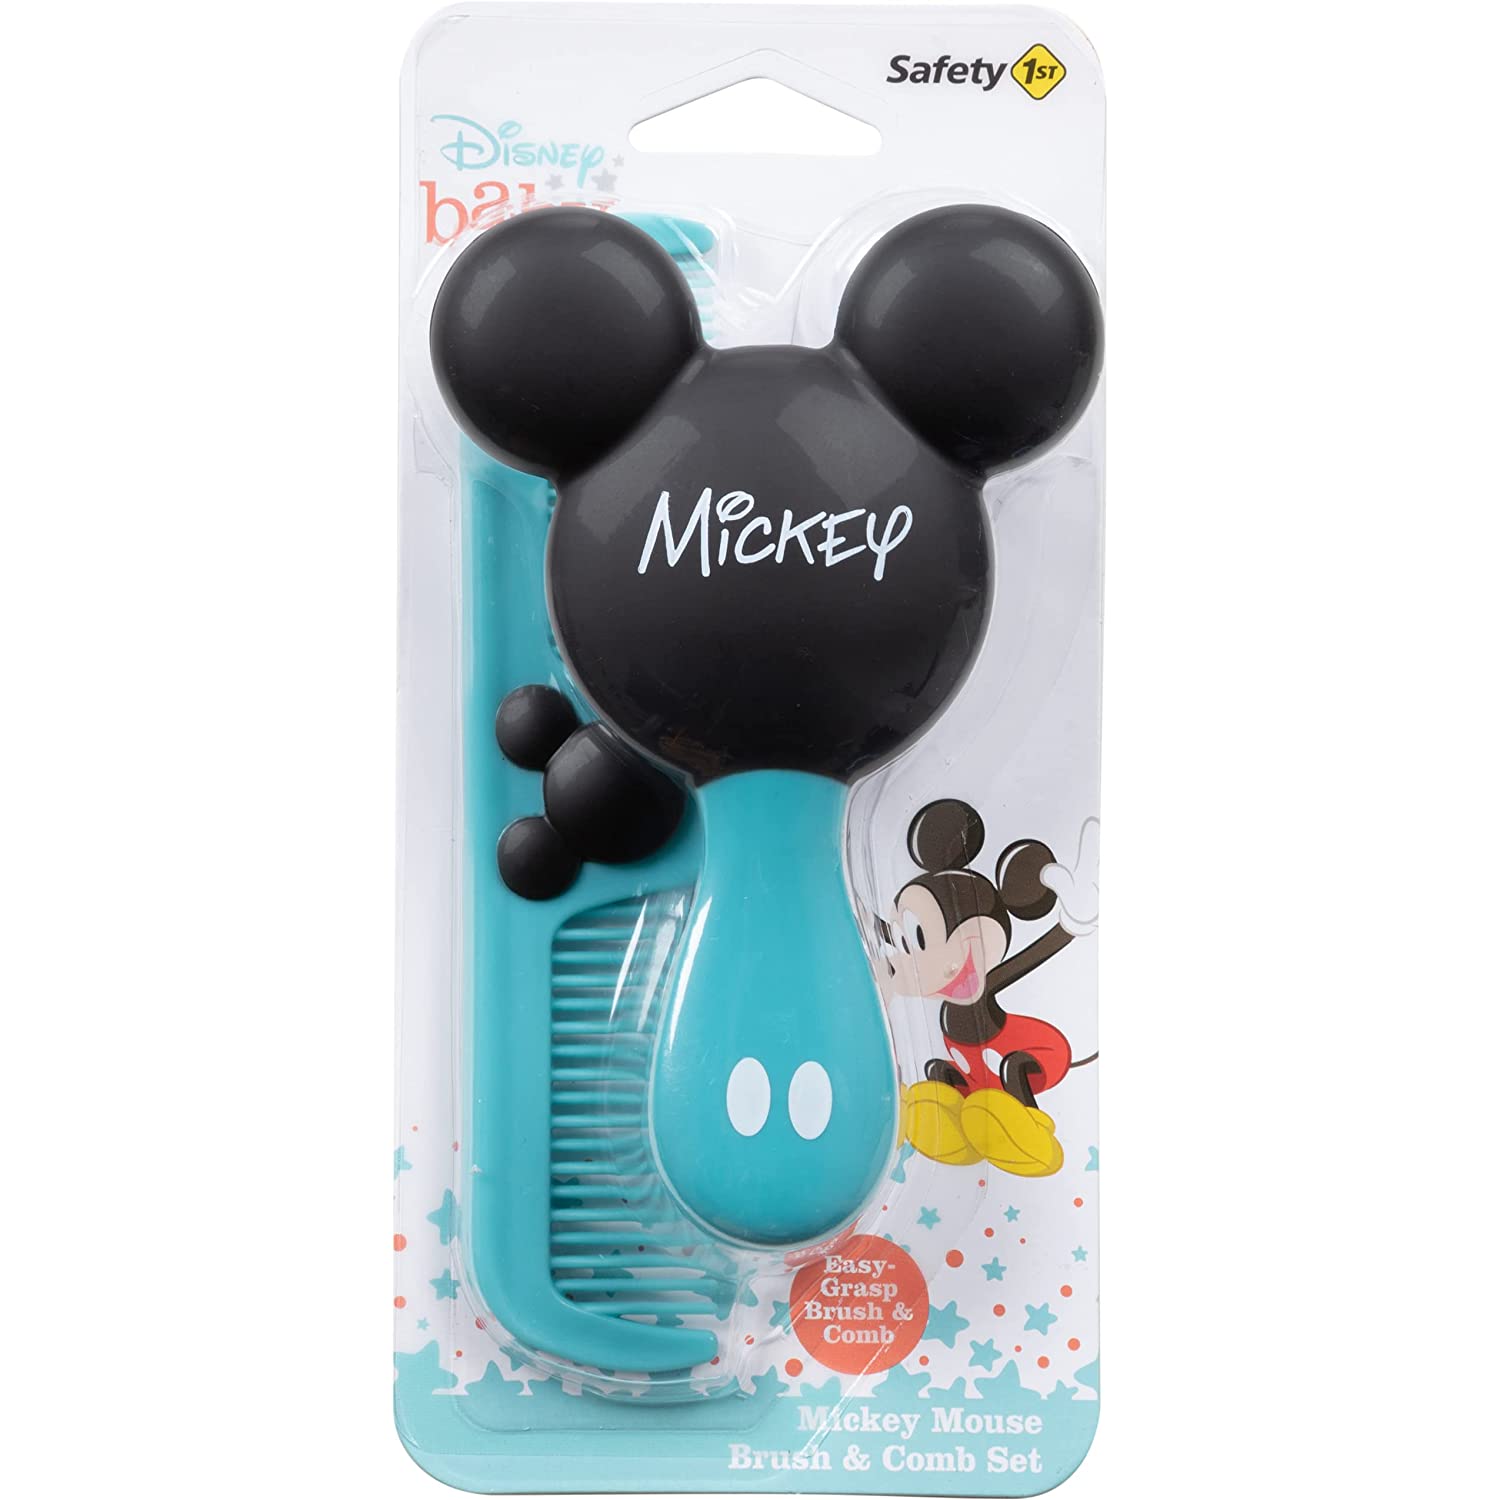 Disney Baby Mickey Mouse Brush & Comb Set, Aqua - With Easy Grip Handles